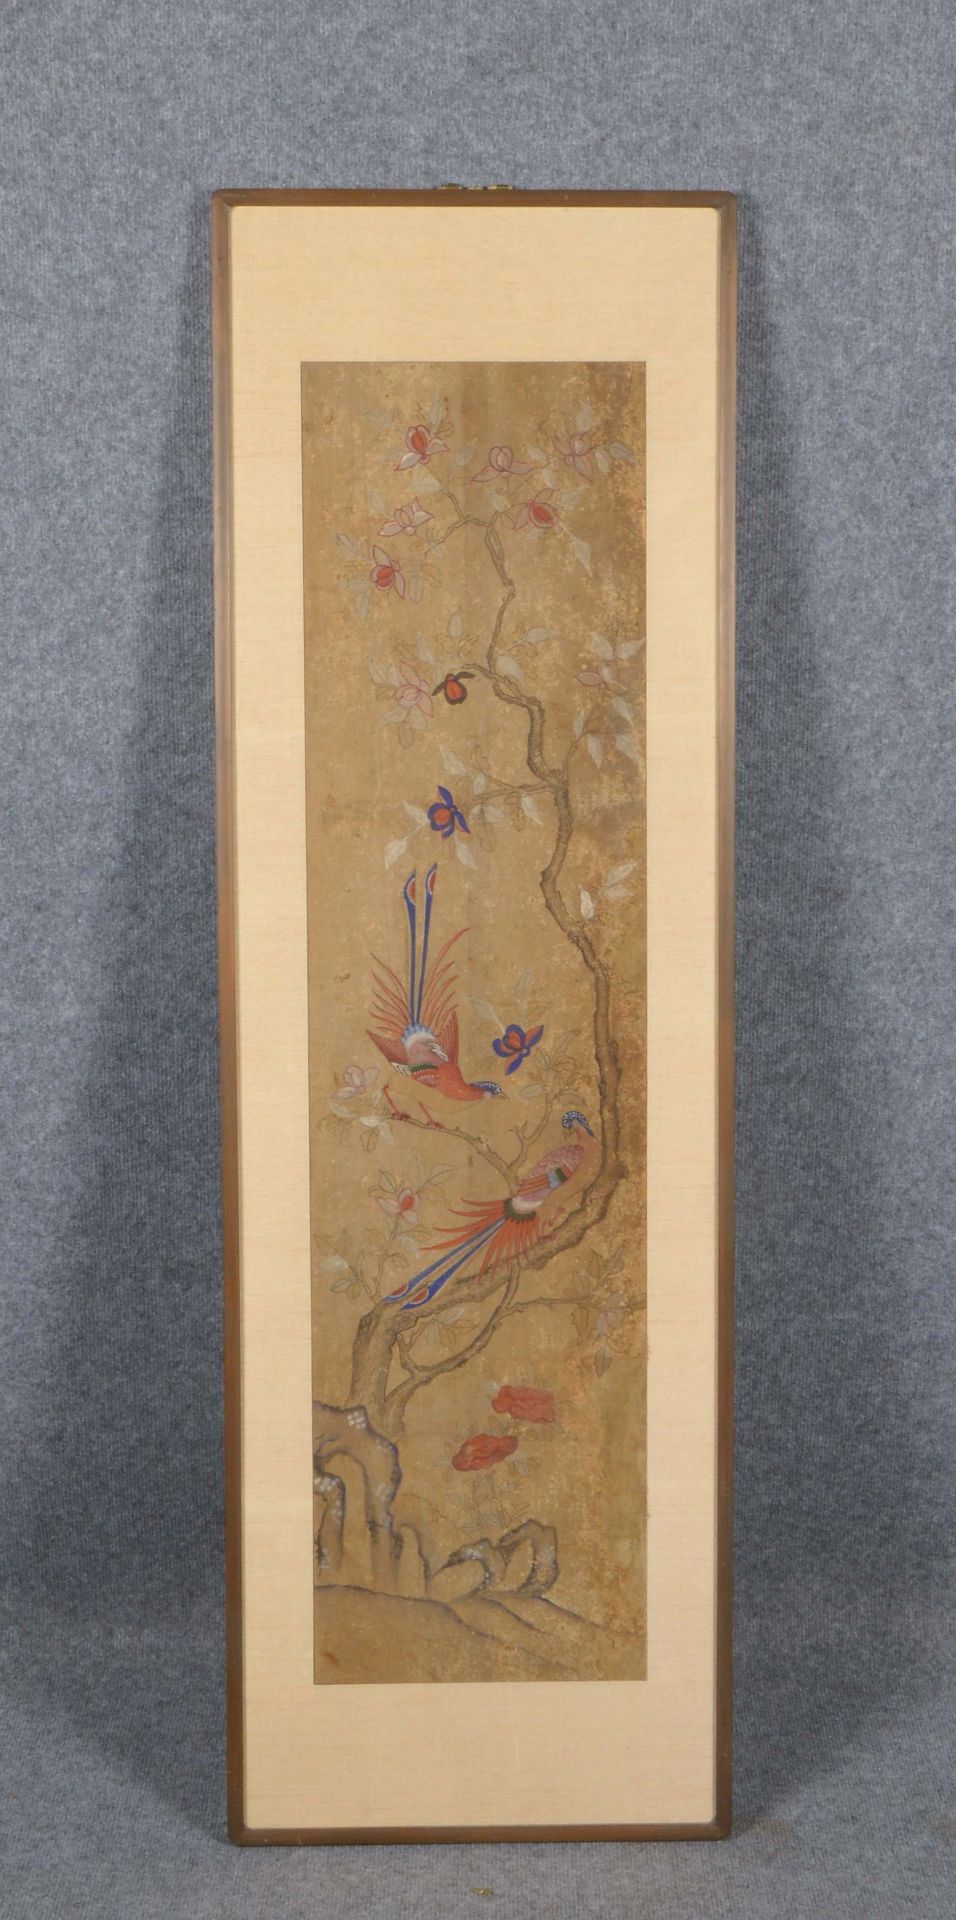 Seidenmalerei (China), 'Phönixe in Landschaft', unsigniert, gerahmt; Rahmenmaße 138 x 43 cm